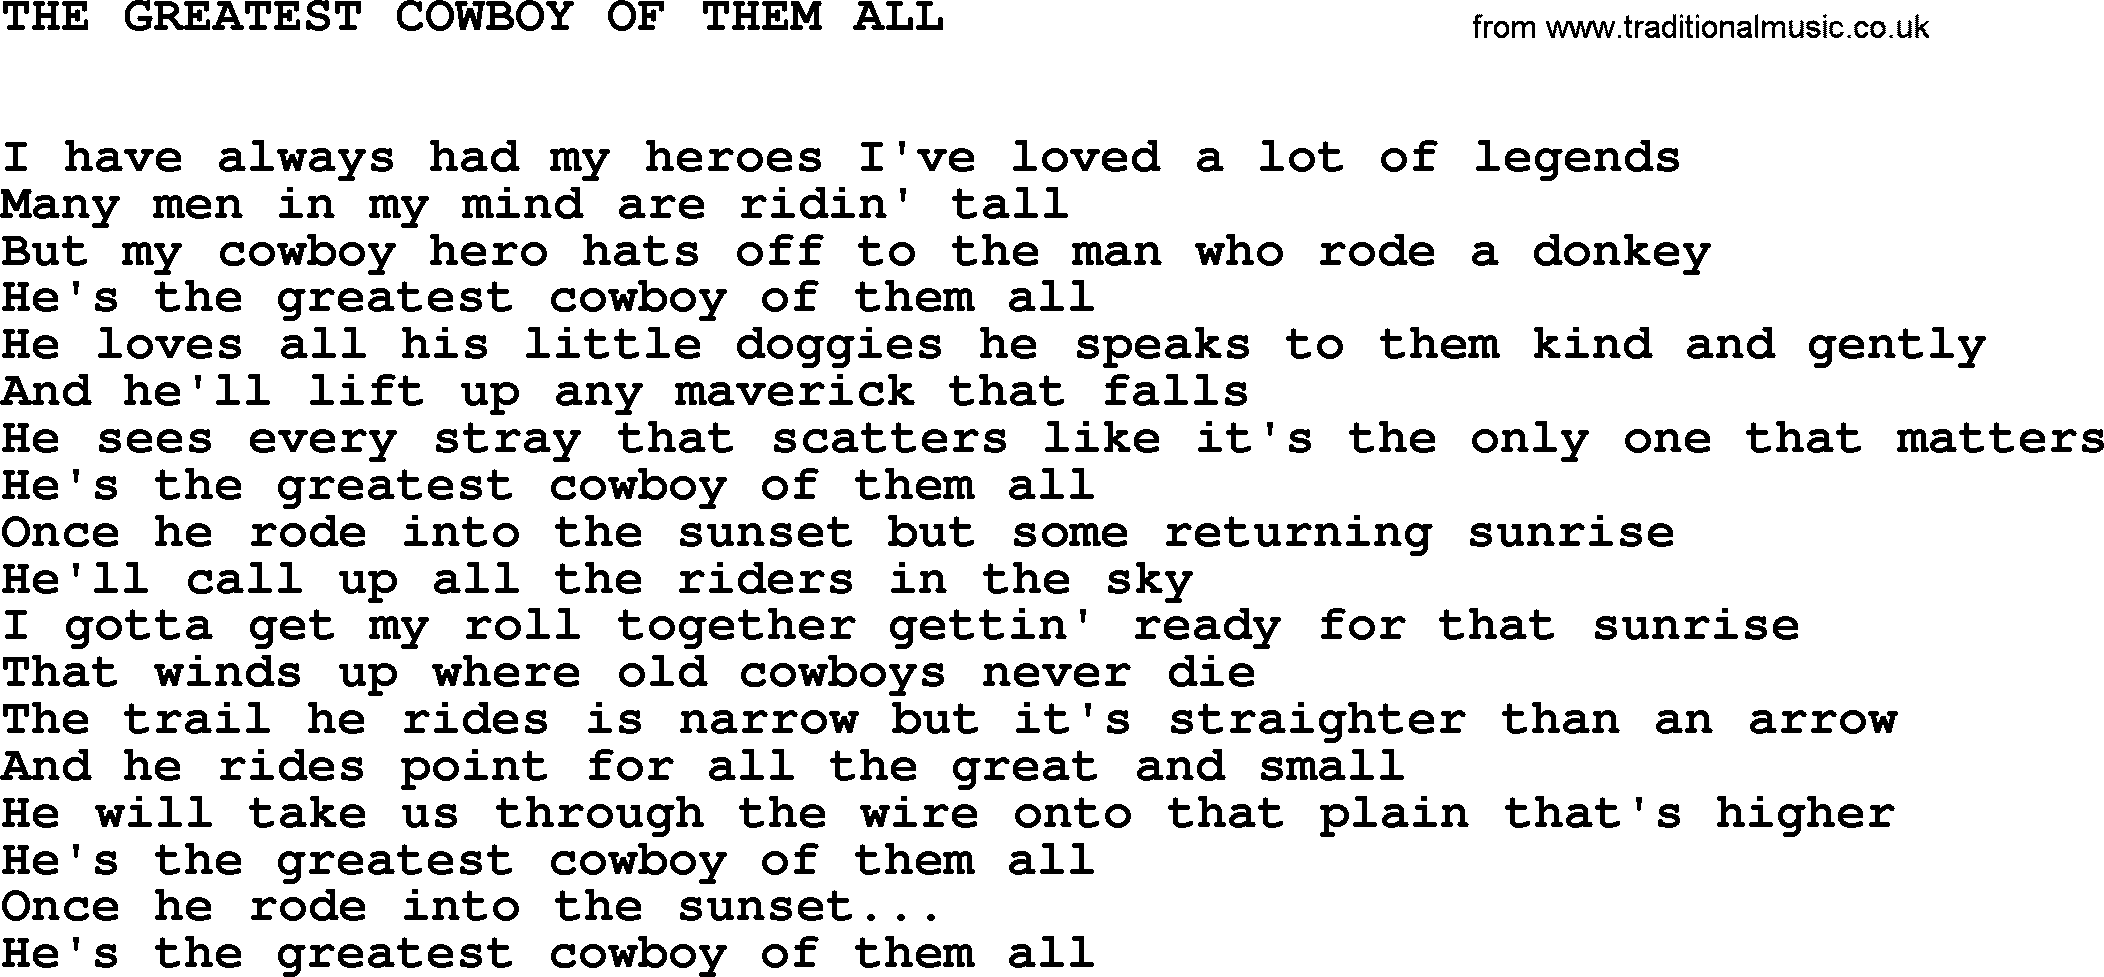 Johnny Cash song The Greatest Cowboy Of Them All.txt lyrics